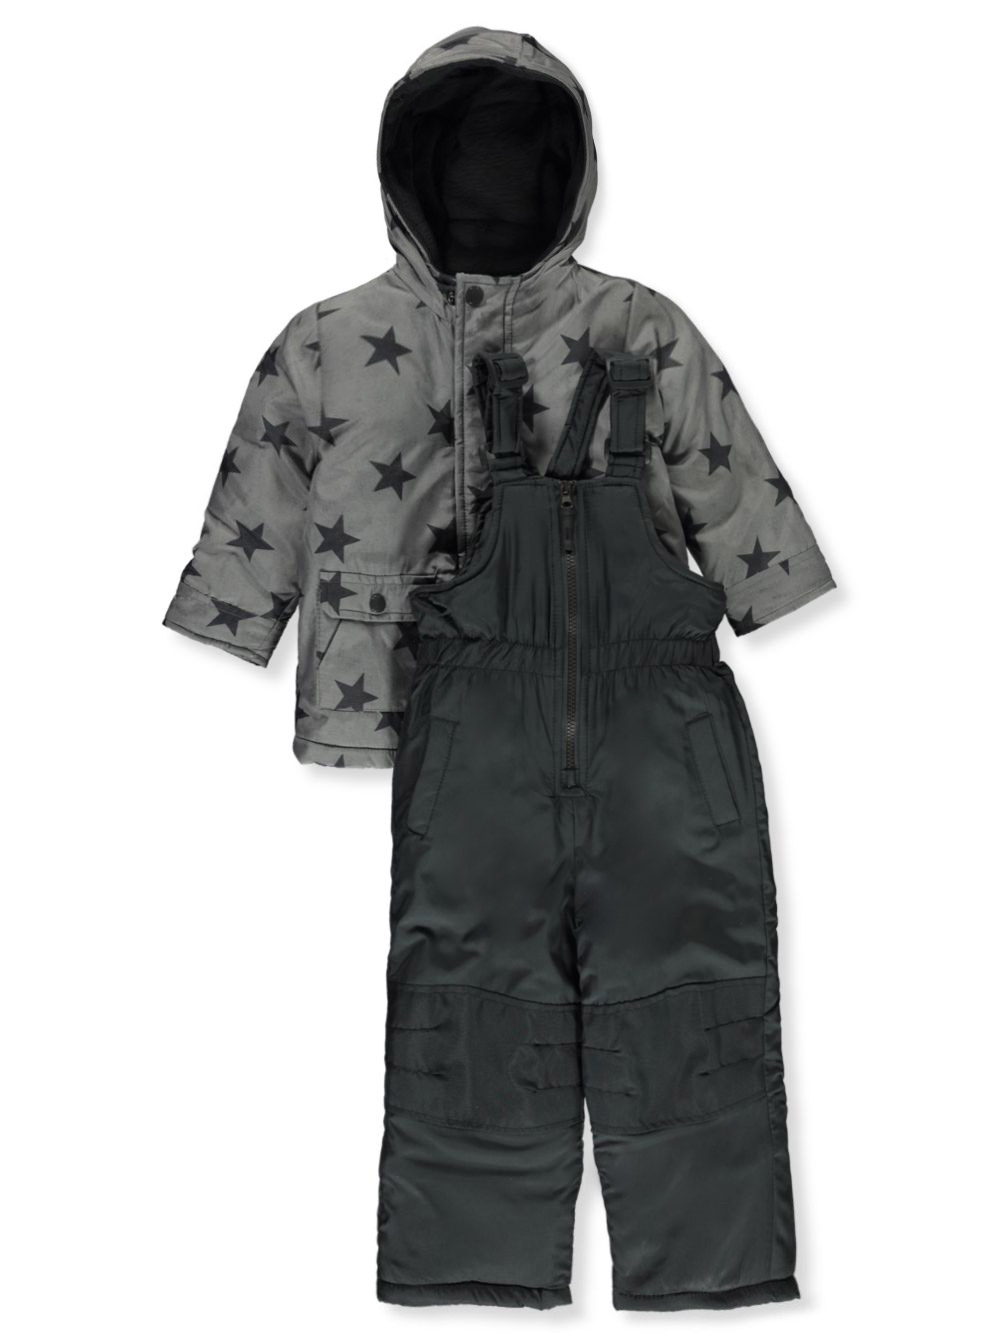 Wipette Ixtreme Baby Boys' 2-Piece Star Snowsuit Set